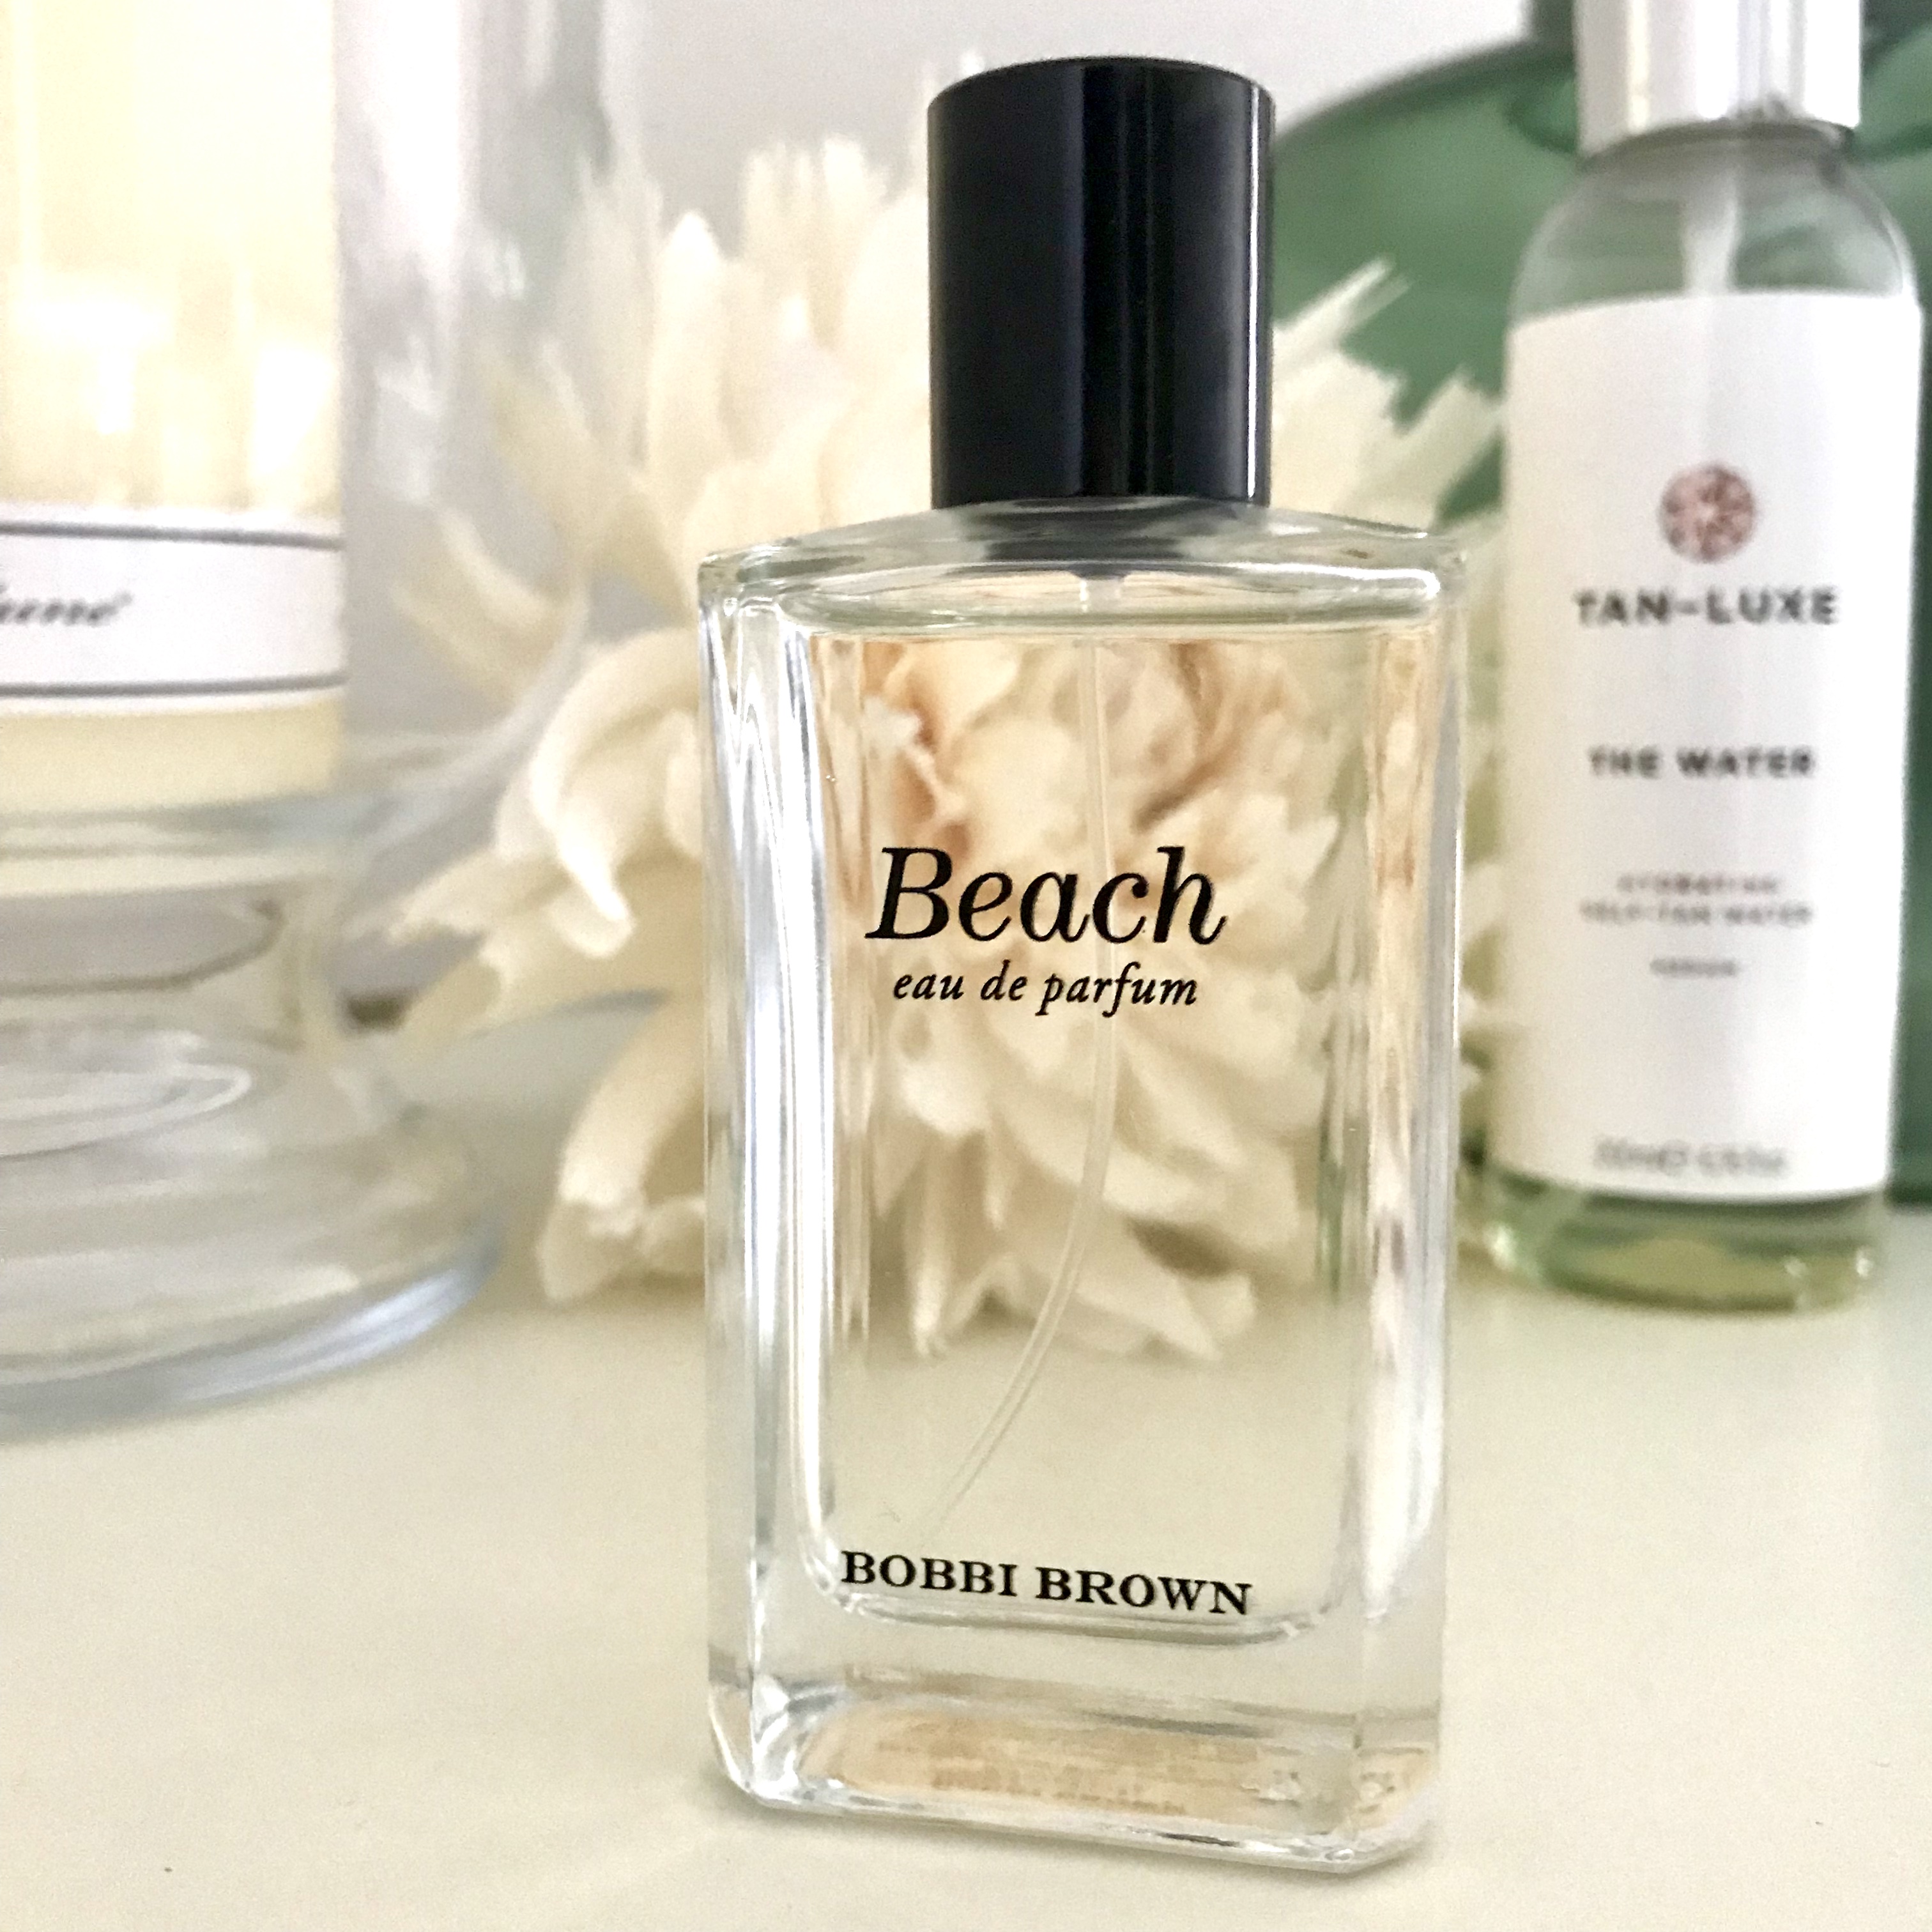 bobbi brown beach perfume